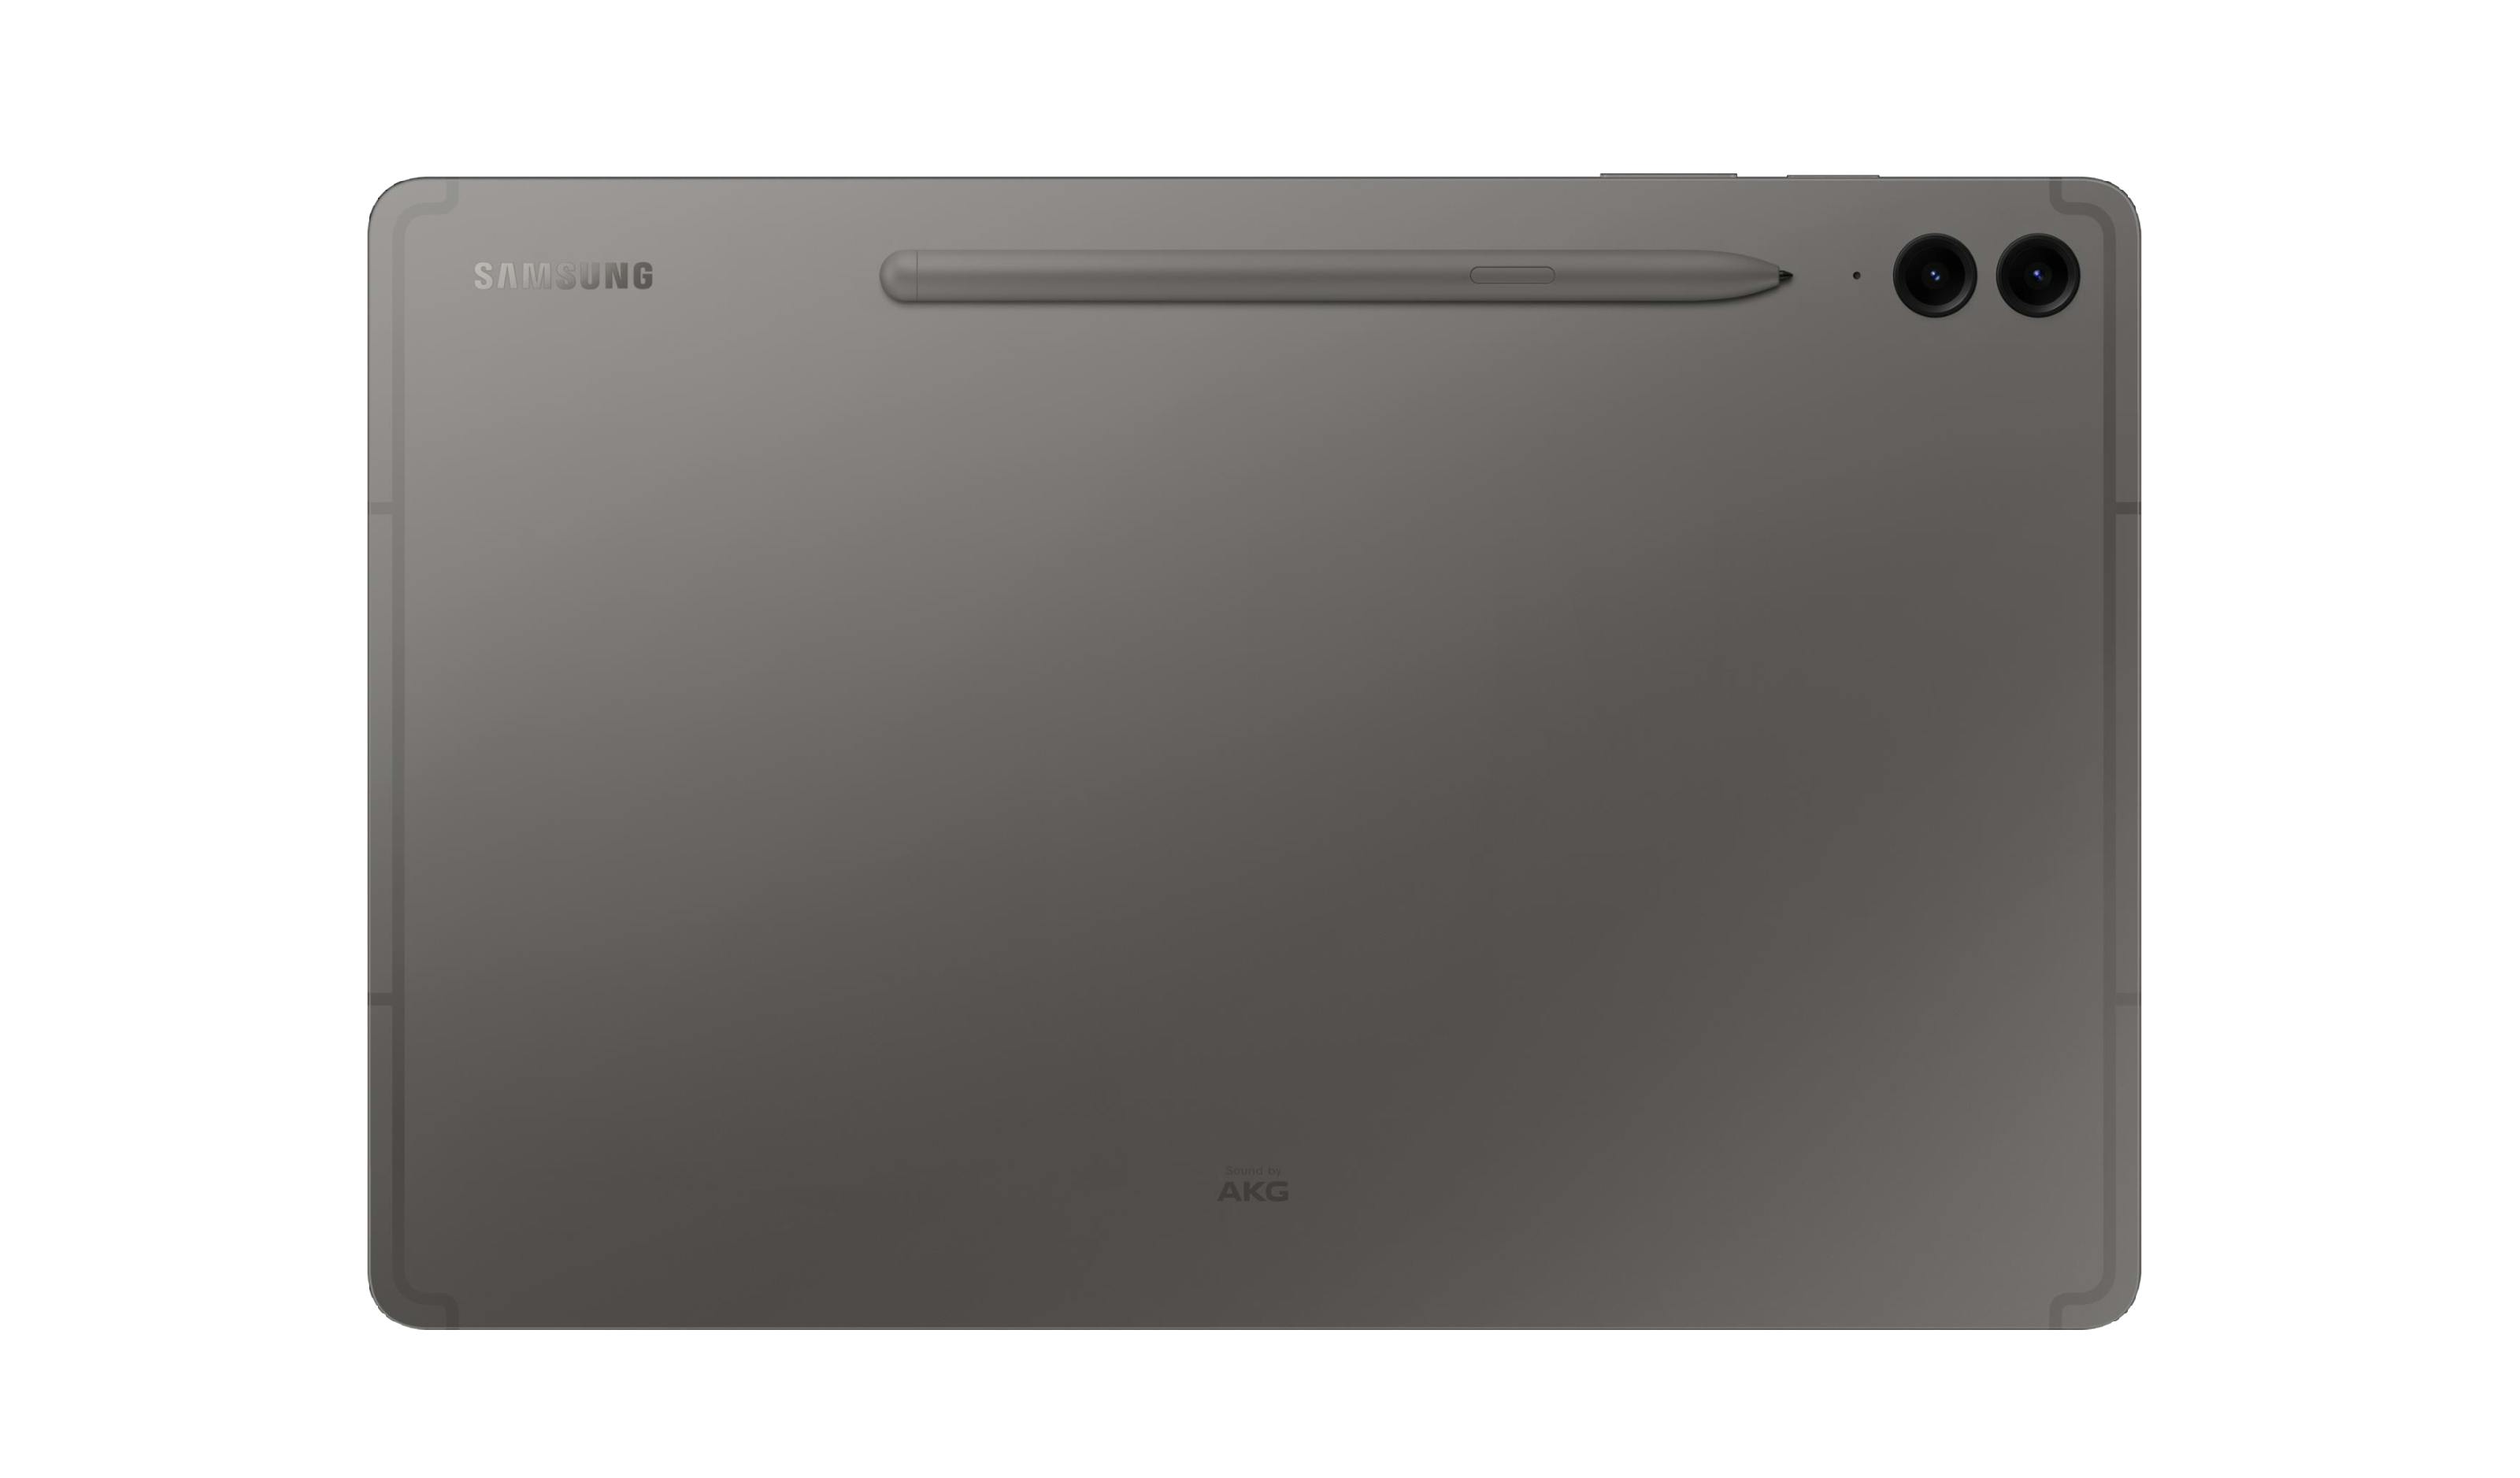 Samsung Galaxy Tab S9 FE+ Tablet, 12.4, 256GB, Gray